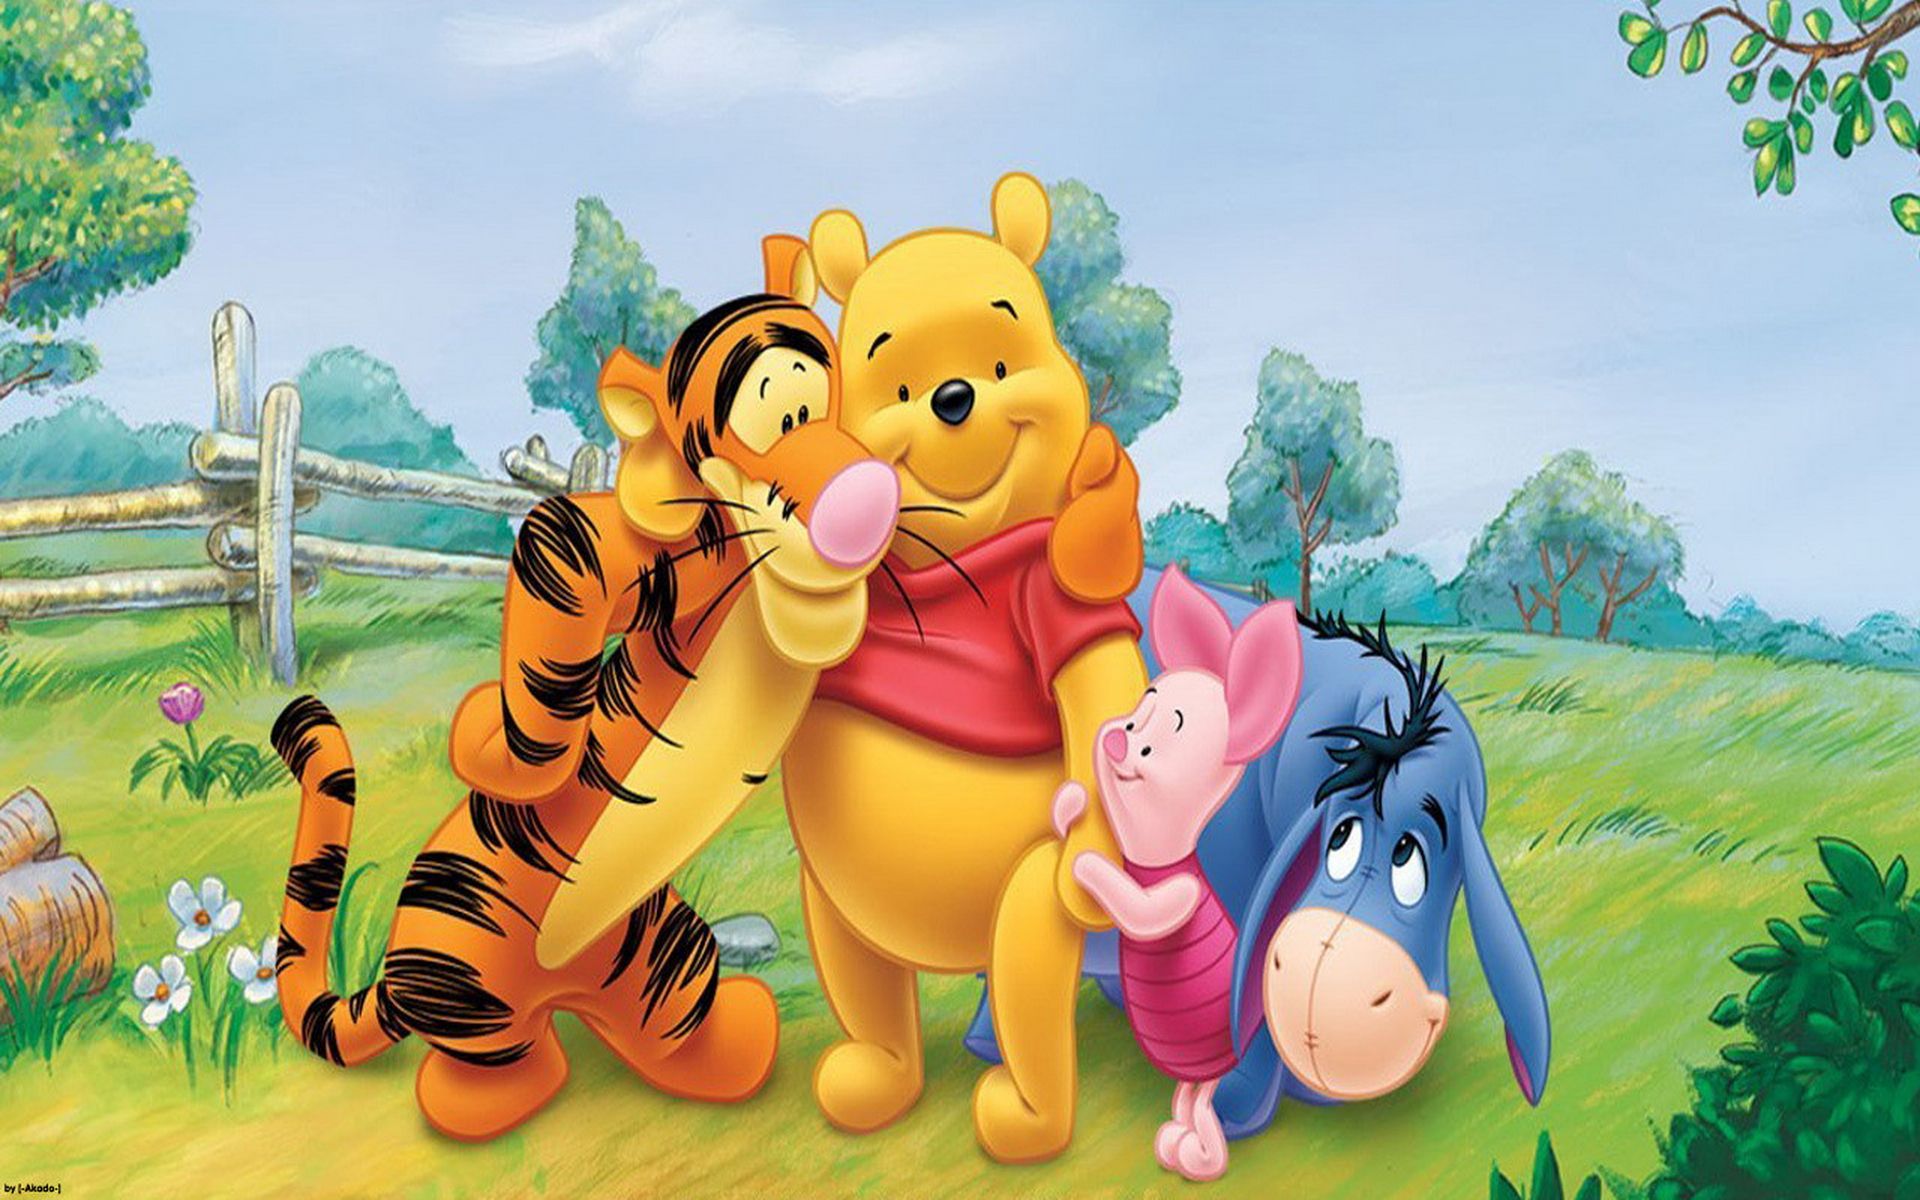 Winnie the Pooh wallpaper hd free download